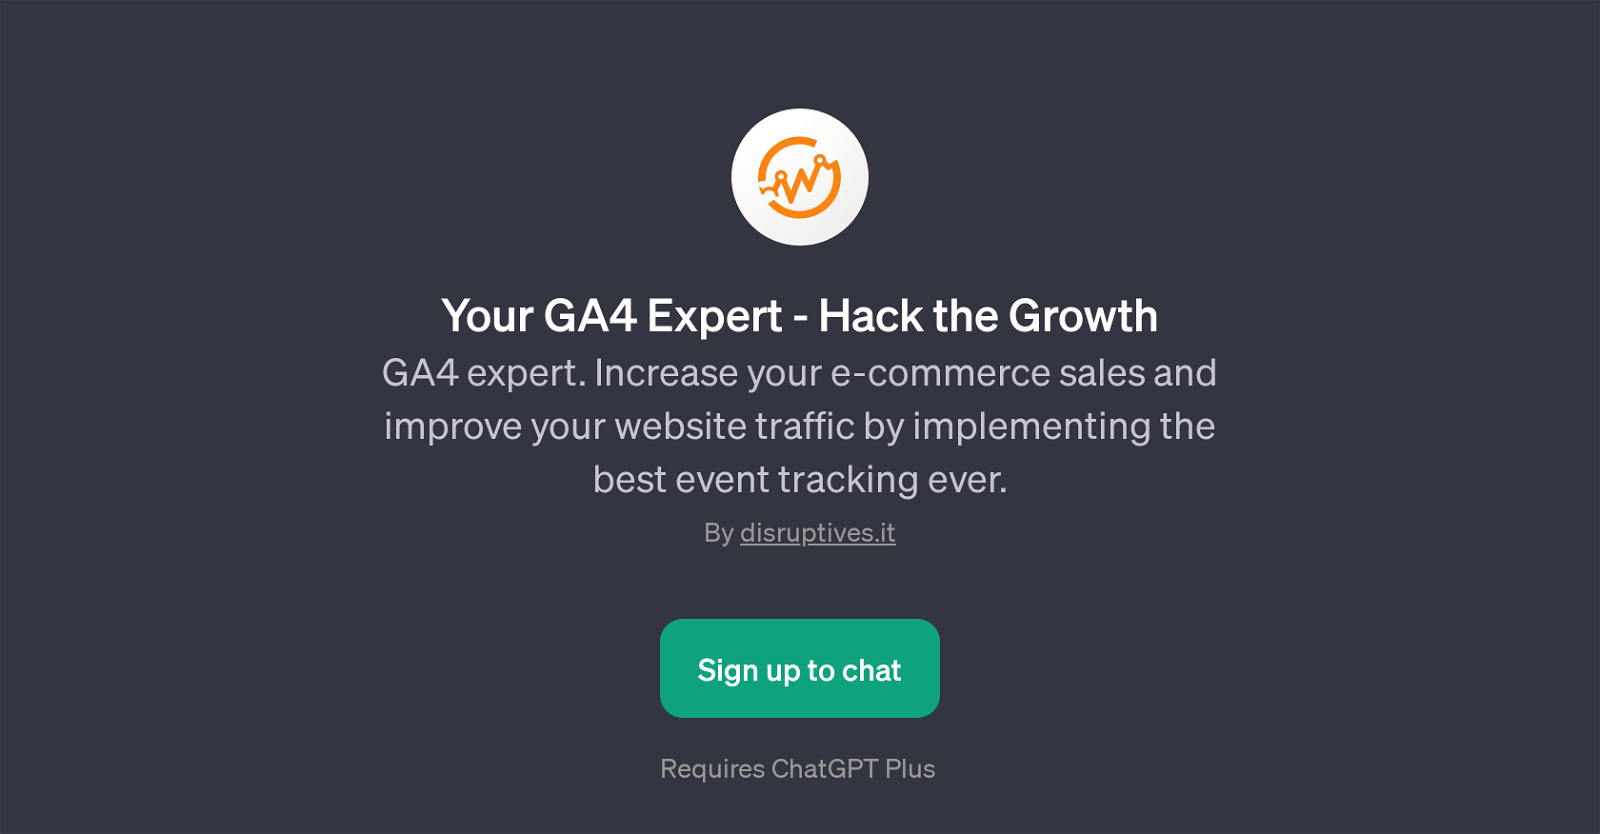 Your GA4 Expert - Hack the Growth website